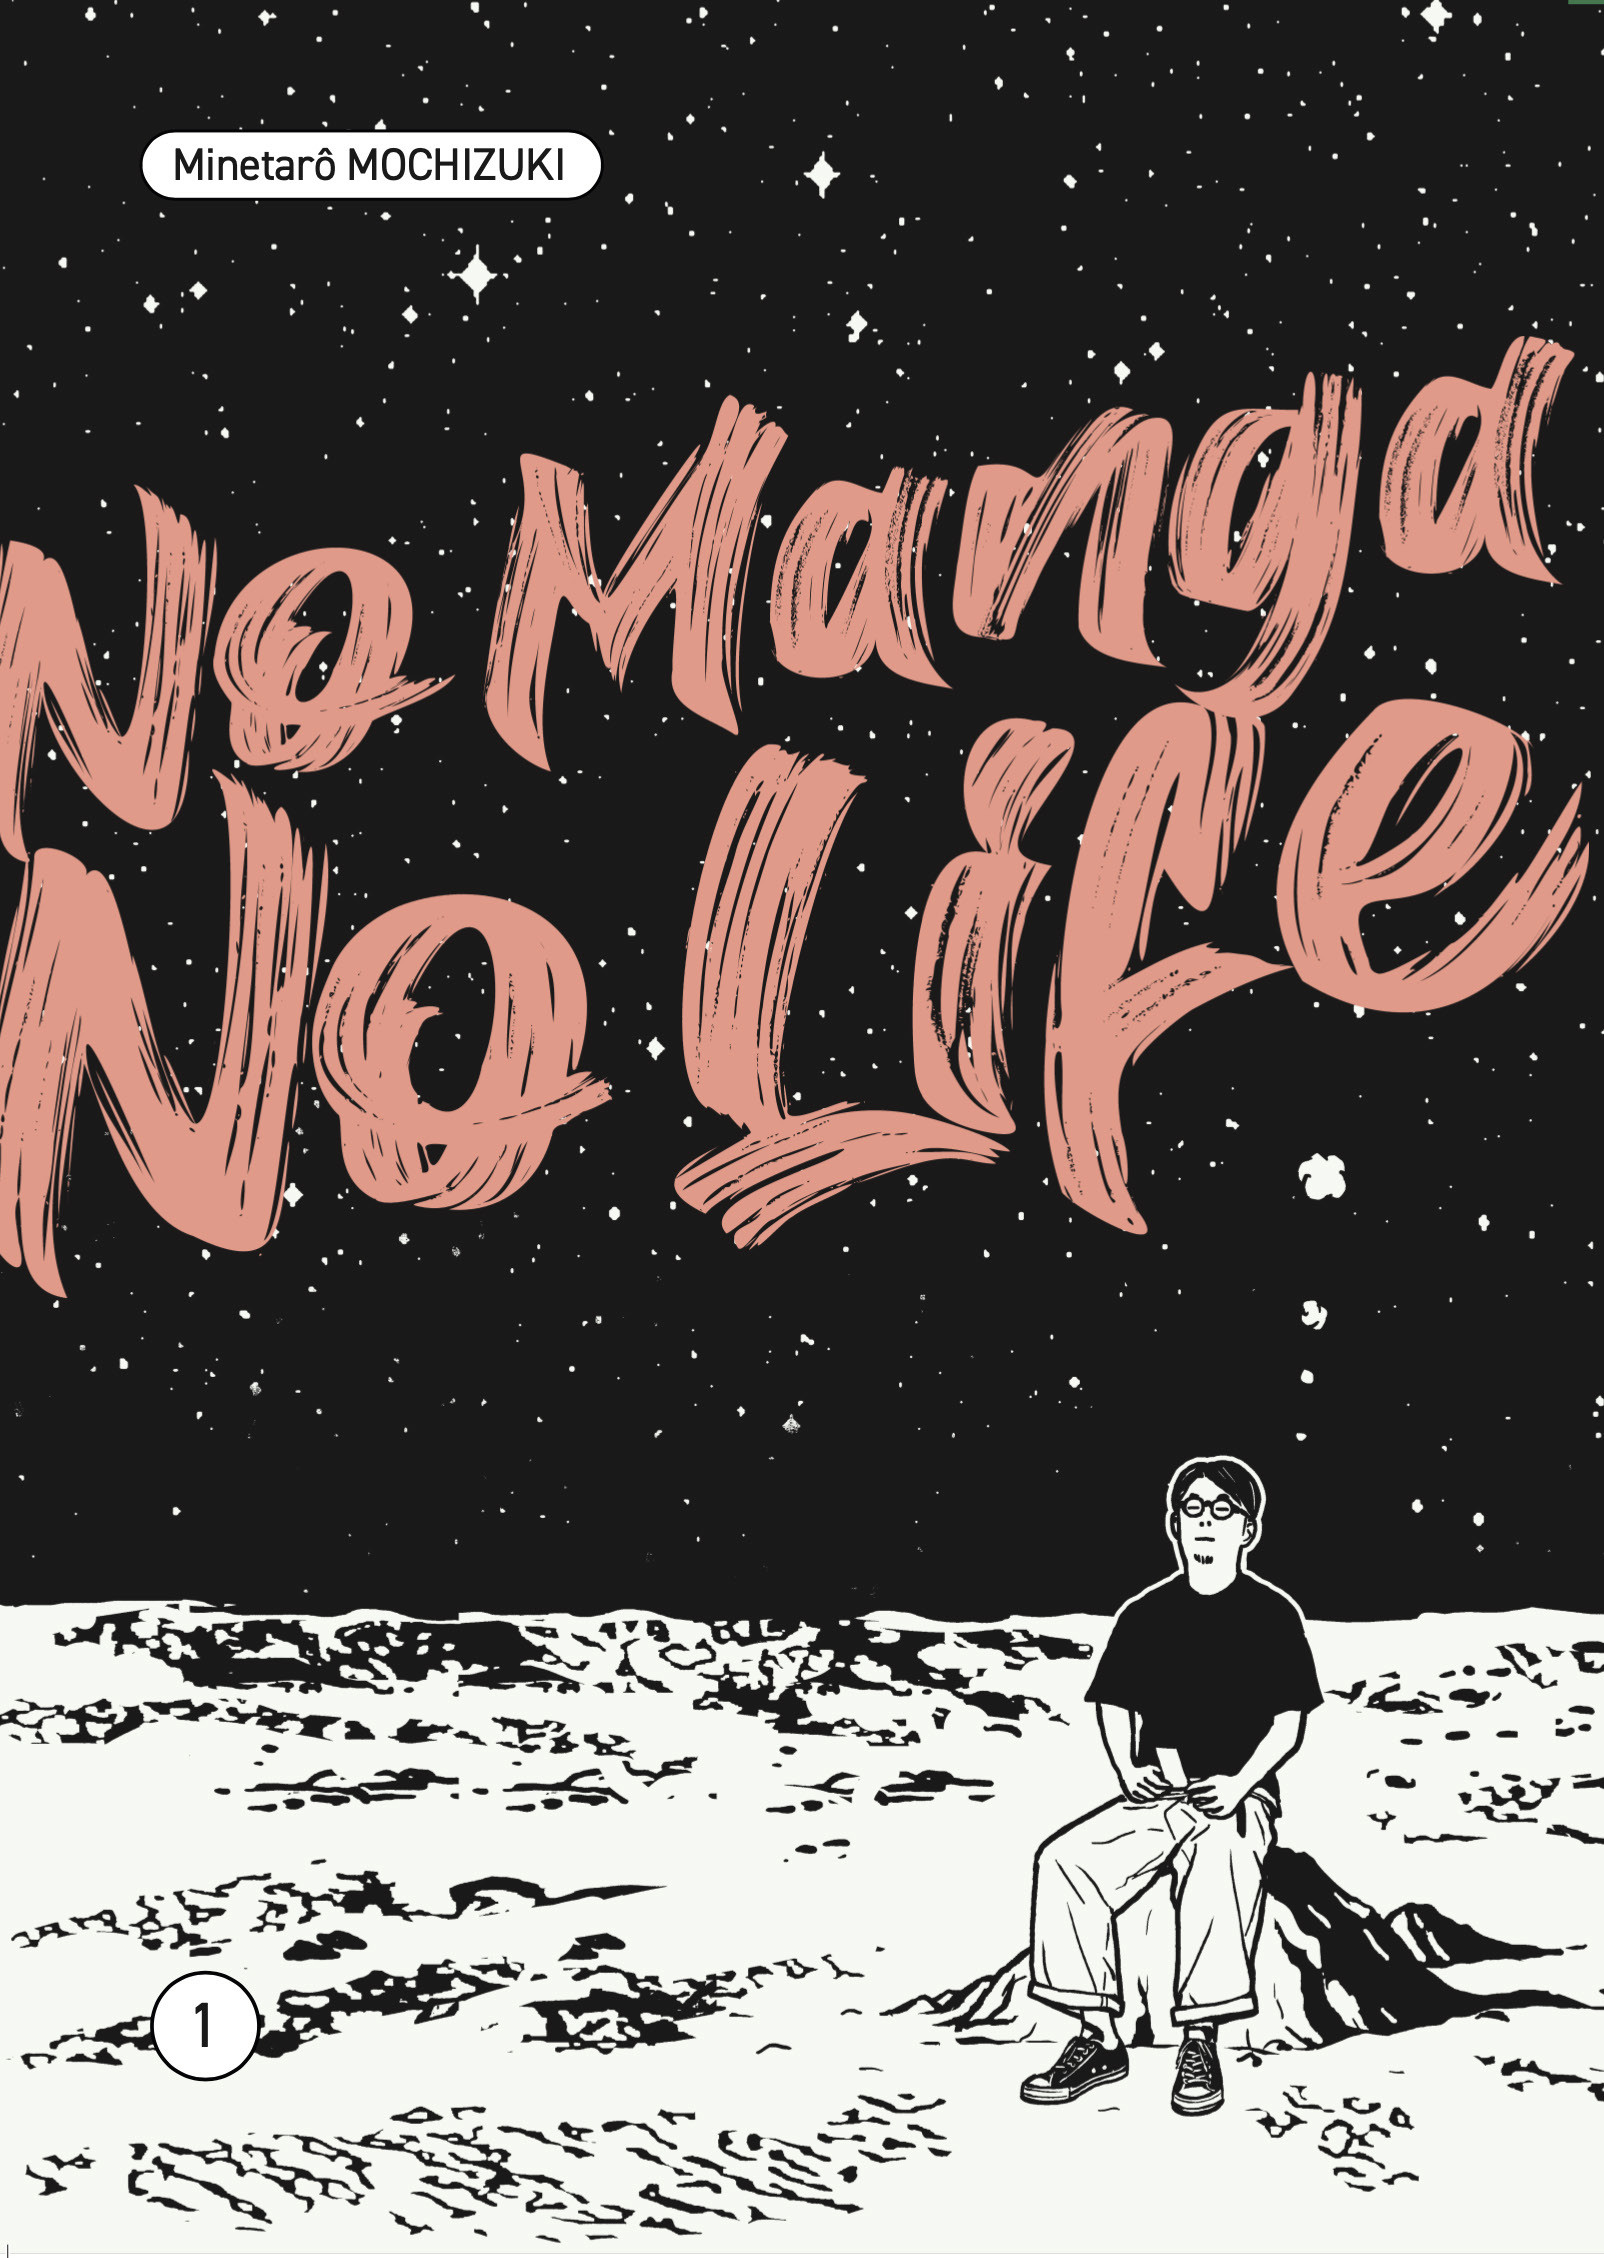 Couverture de No Manga No Life volume 1